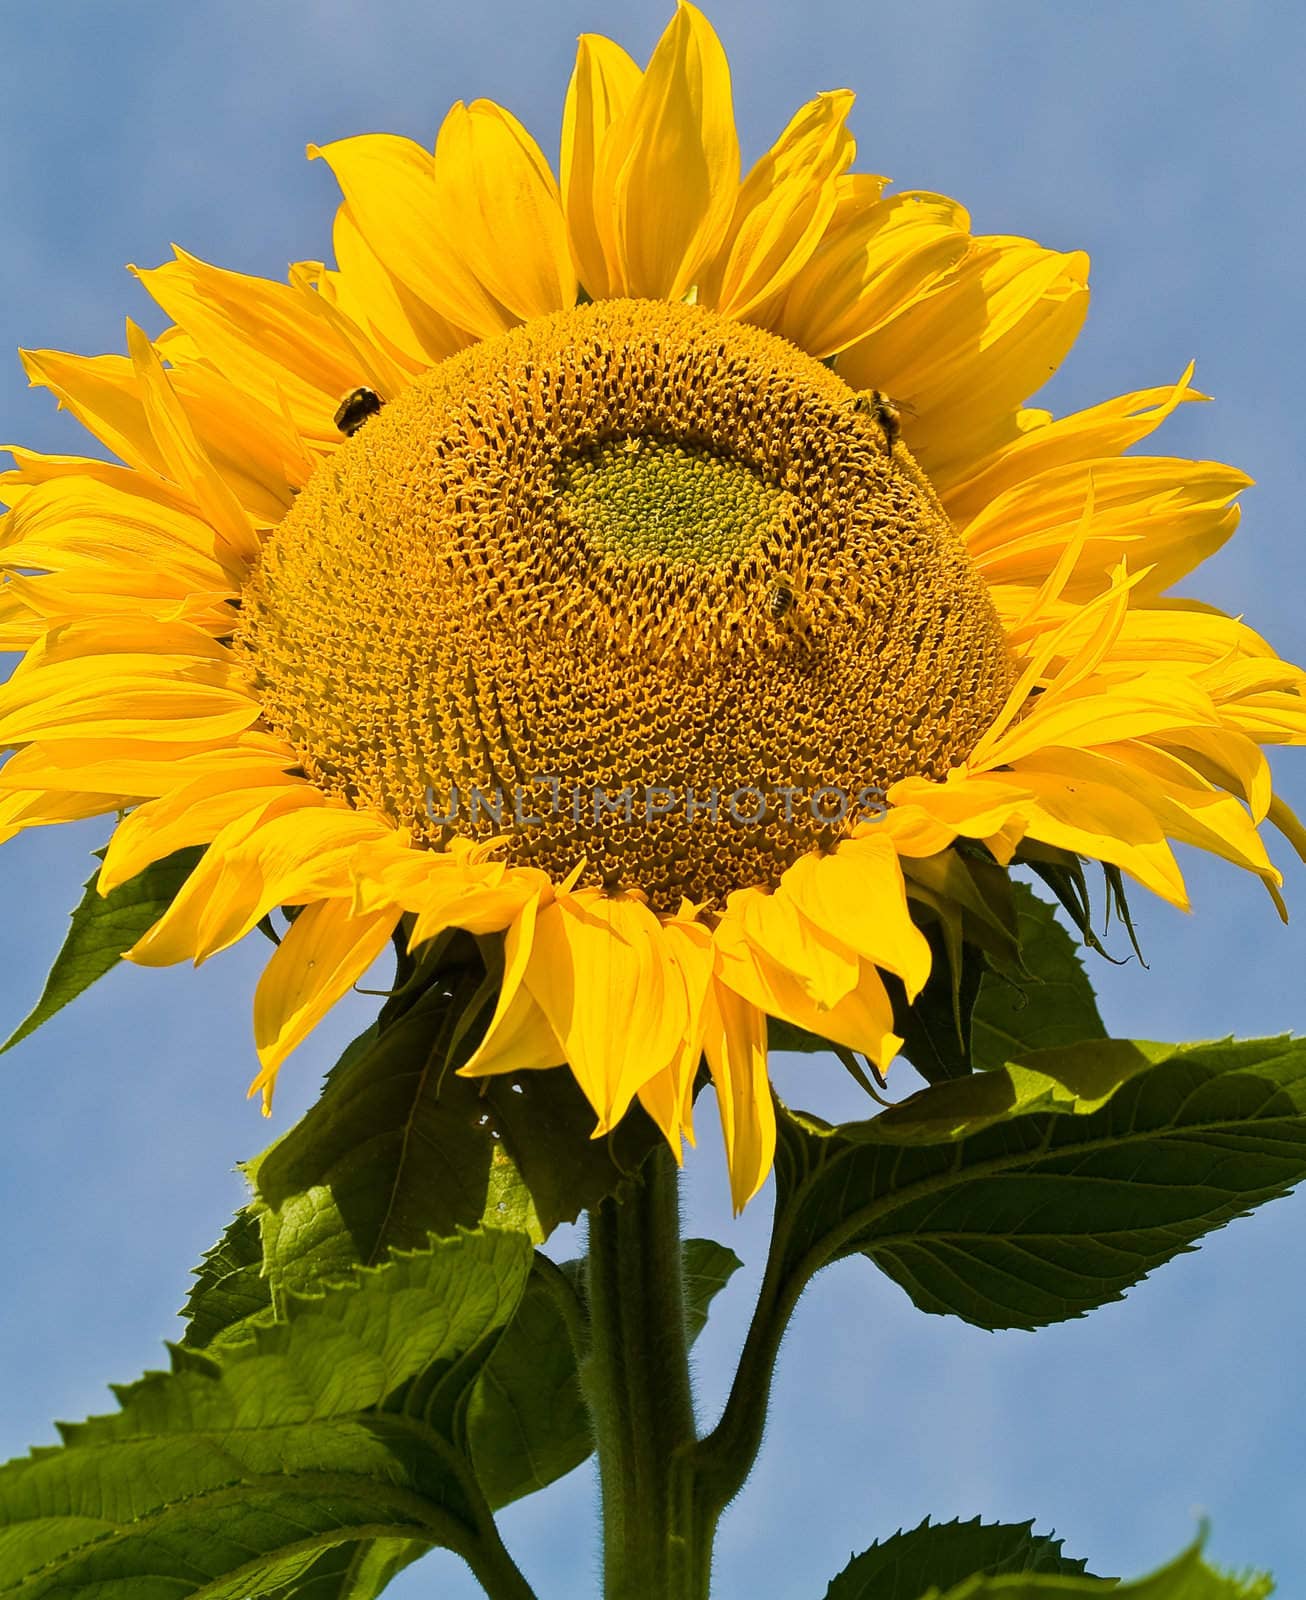 Honeybee Covered in Pollen in a Sunflower